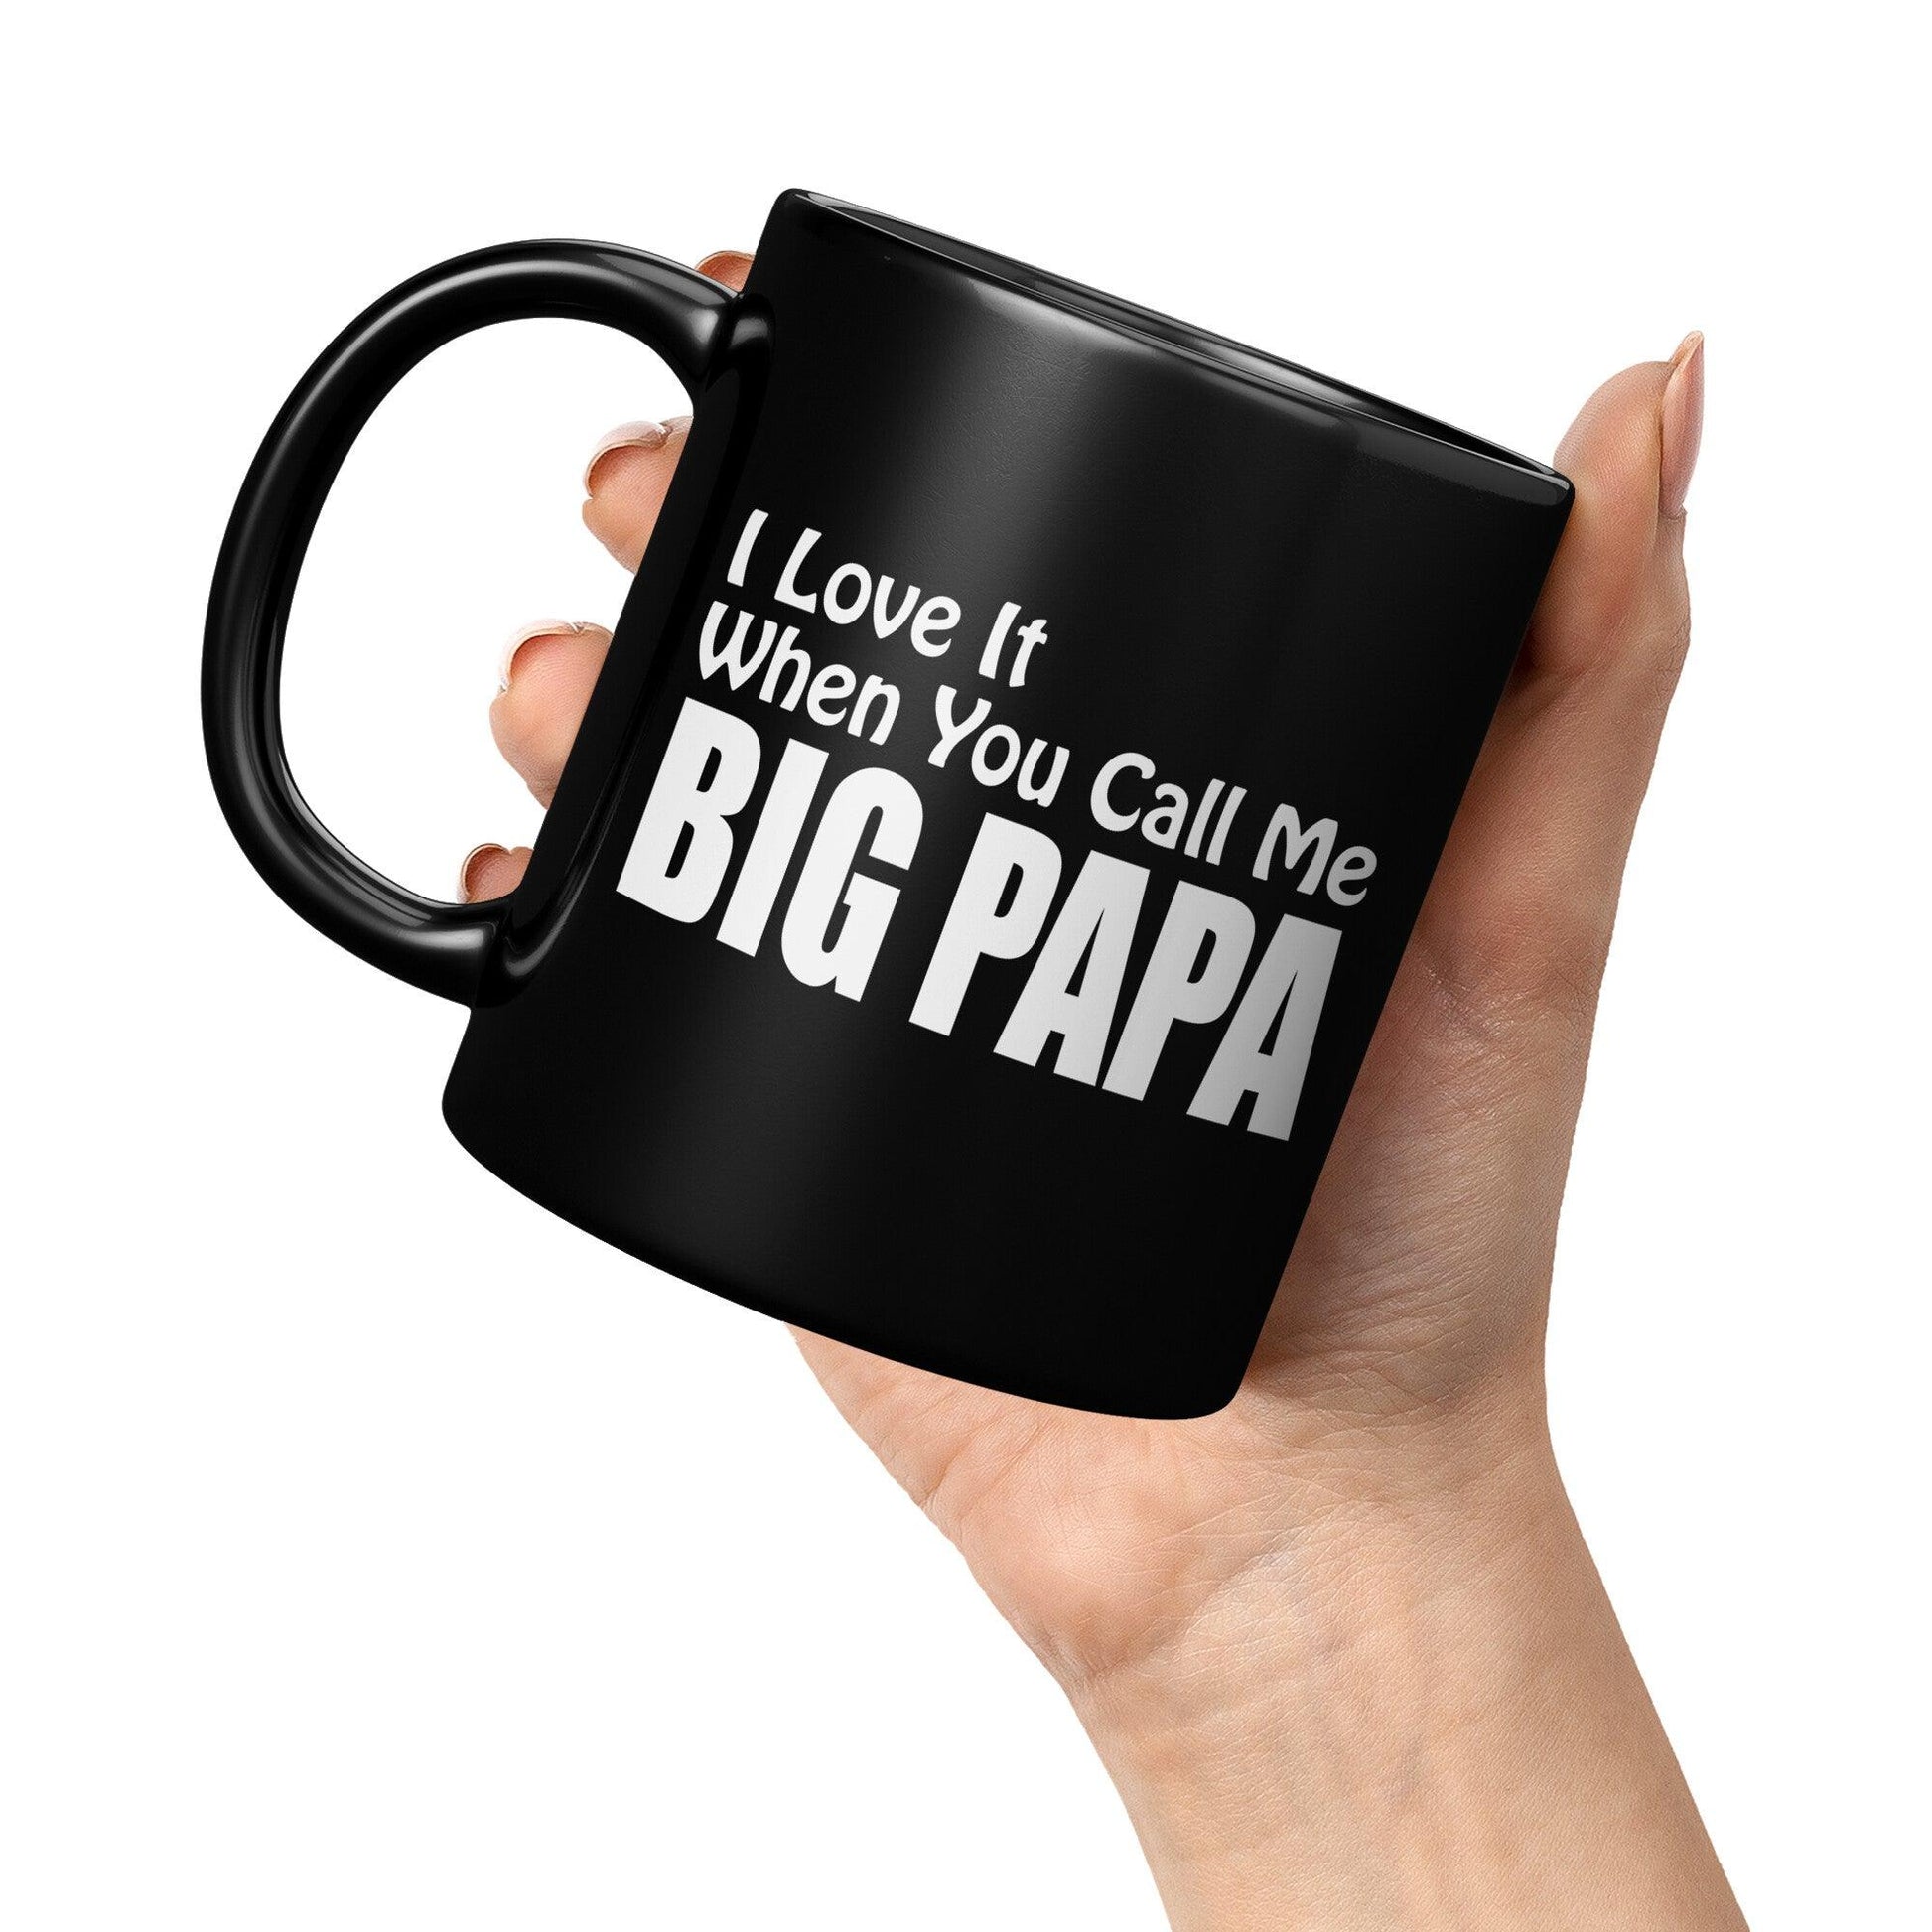 I love It When You Call Me -BIG PAPA Black Mug - TheGivenGet